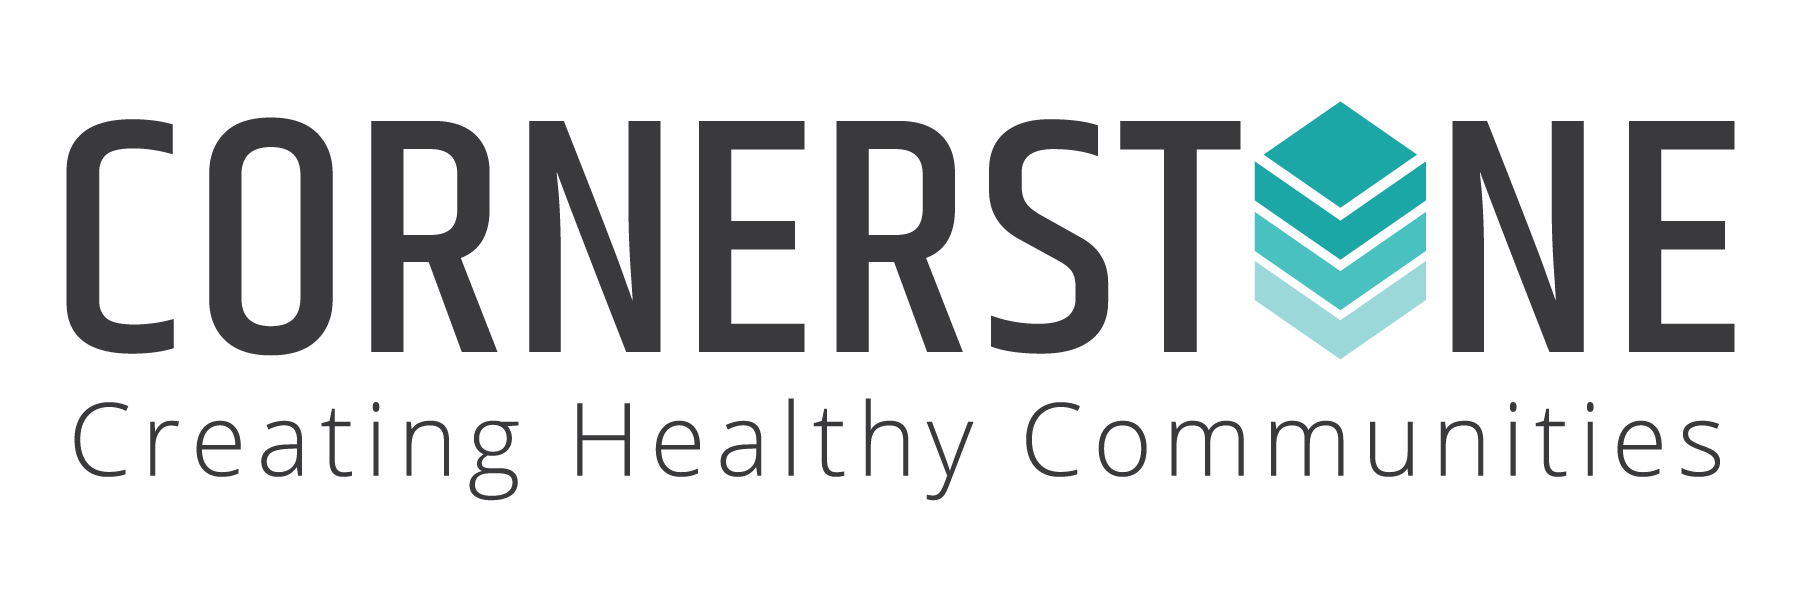 Cornerstone Logo with Tagline: Creating Healthy Communities